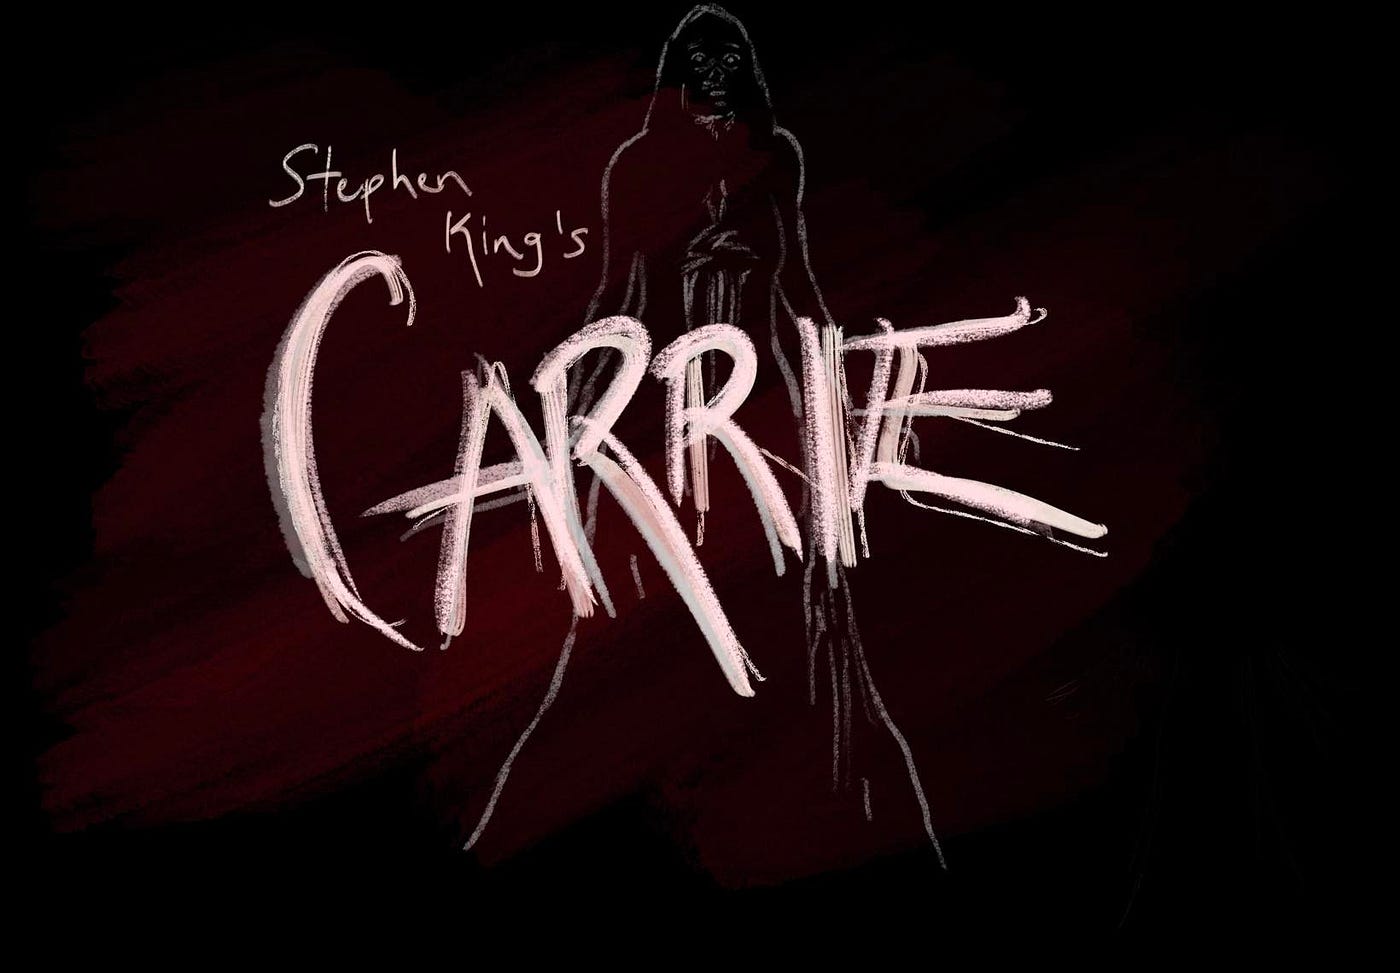 How “Carrie” Got Stephen King Noticed, by Nicholas Scott, Writers' Blokke